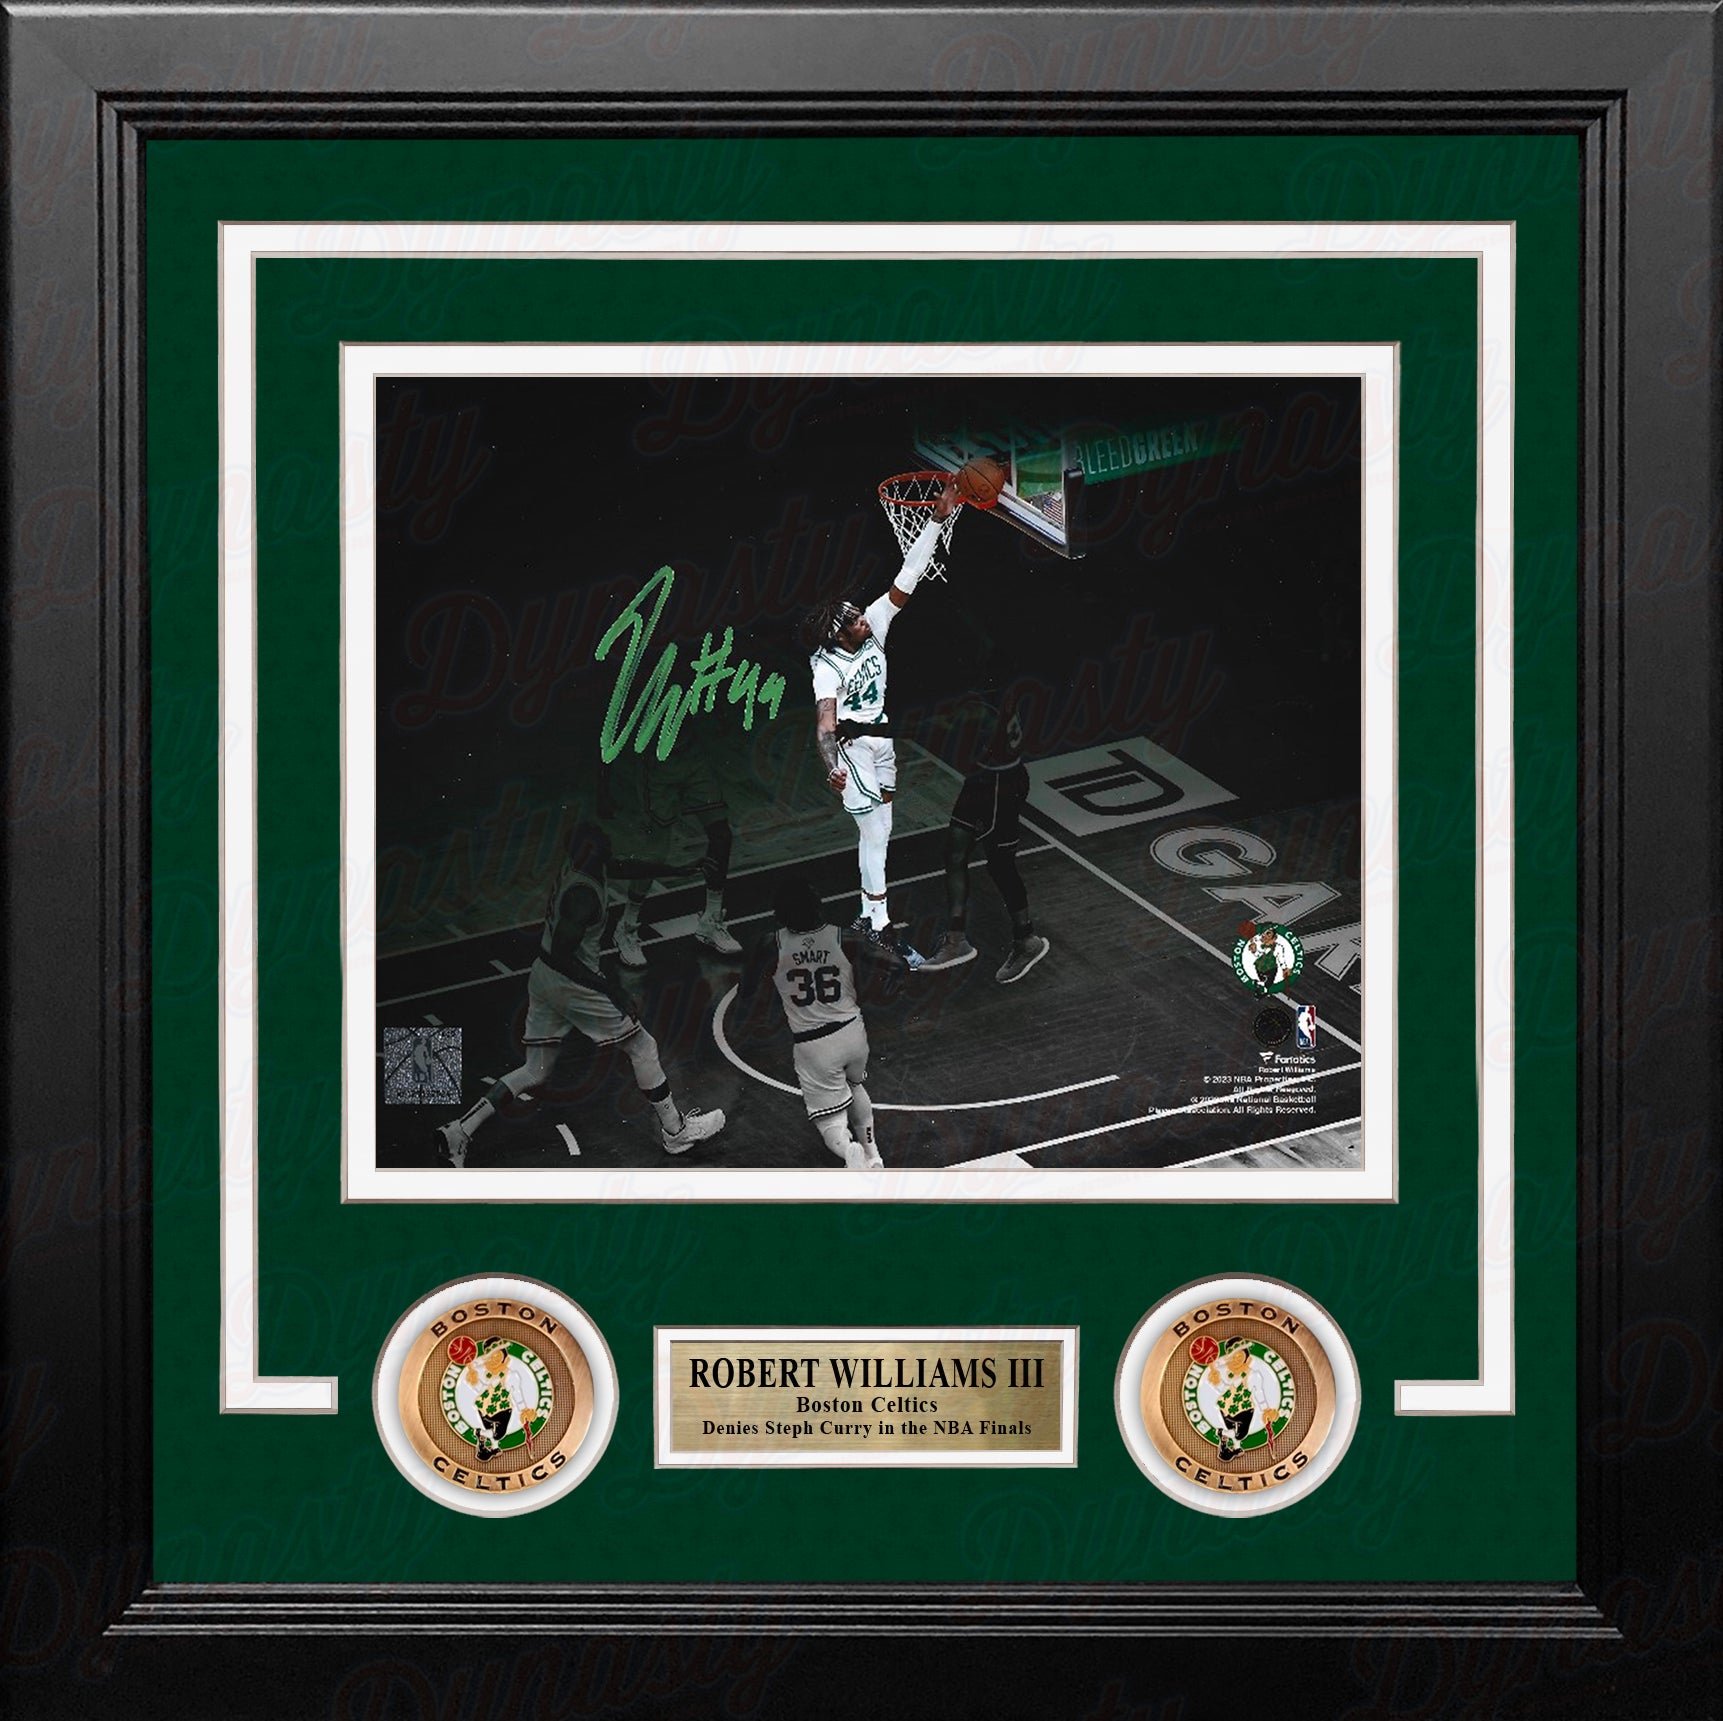 Robert Williams III Blocks Steph Curry Boston Celtics Autographed Framed Basketball Photo - Dynasty Sports & Framing 